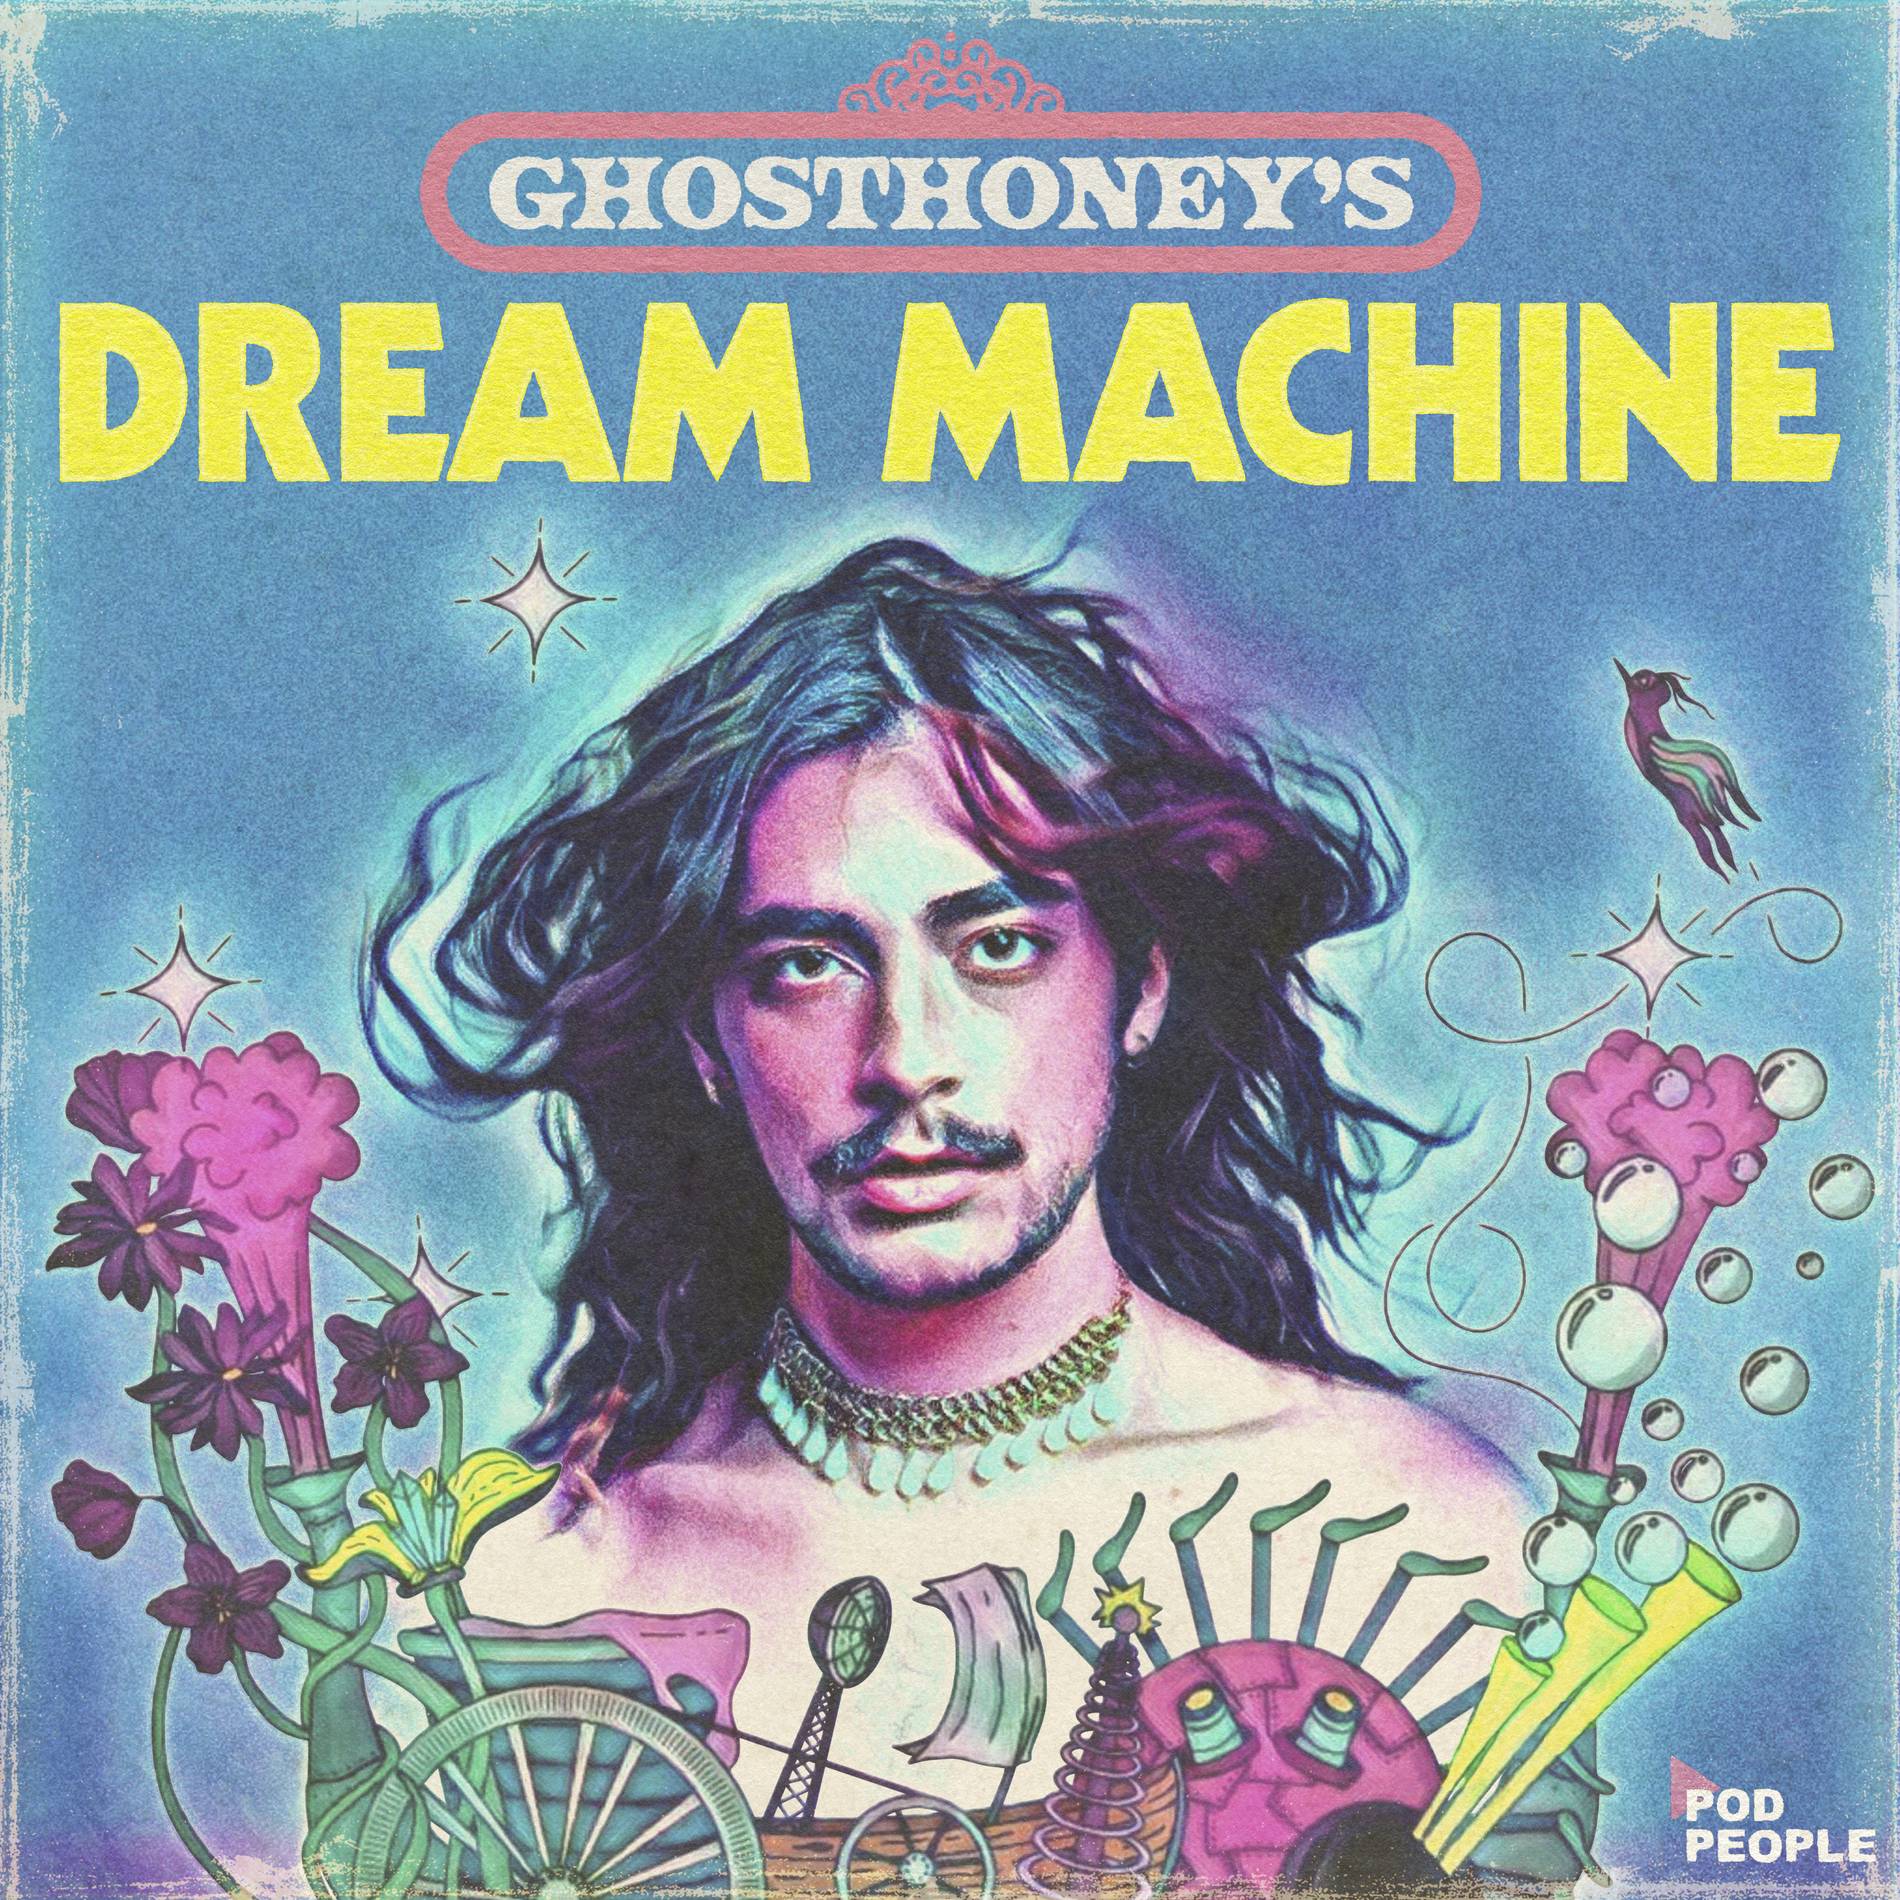 Ghosthoney's Dream Machine podcast